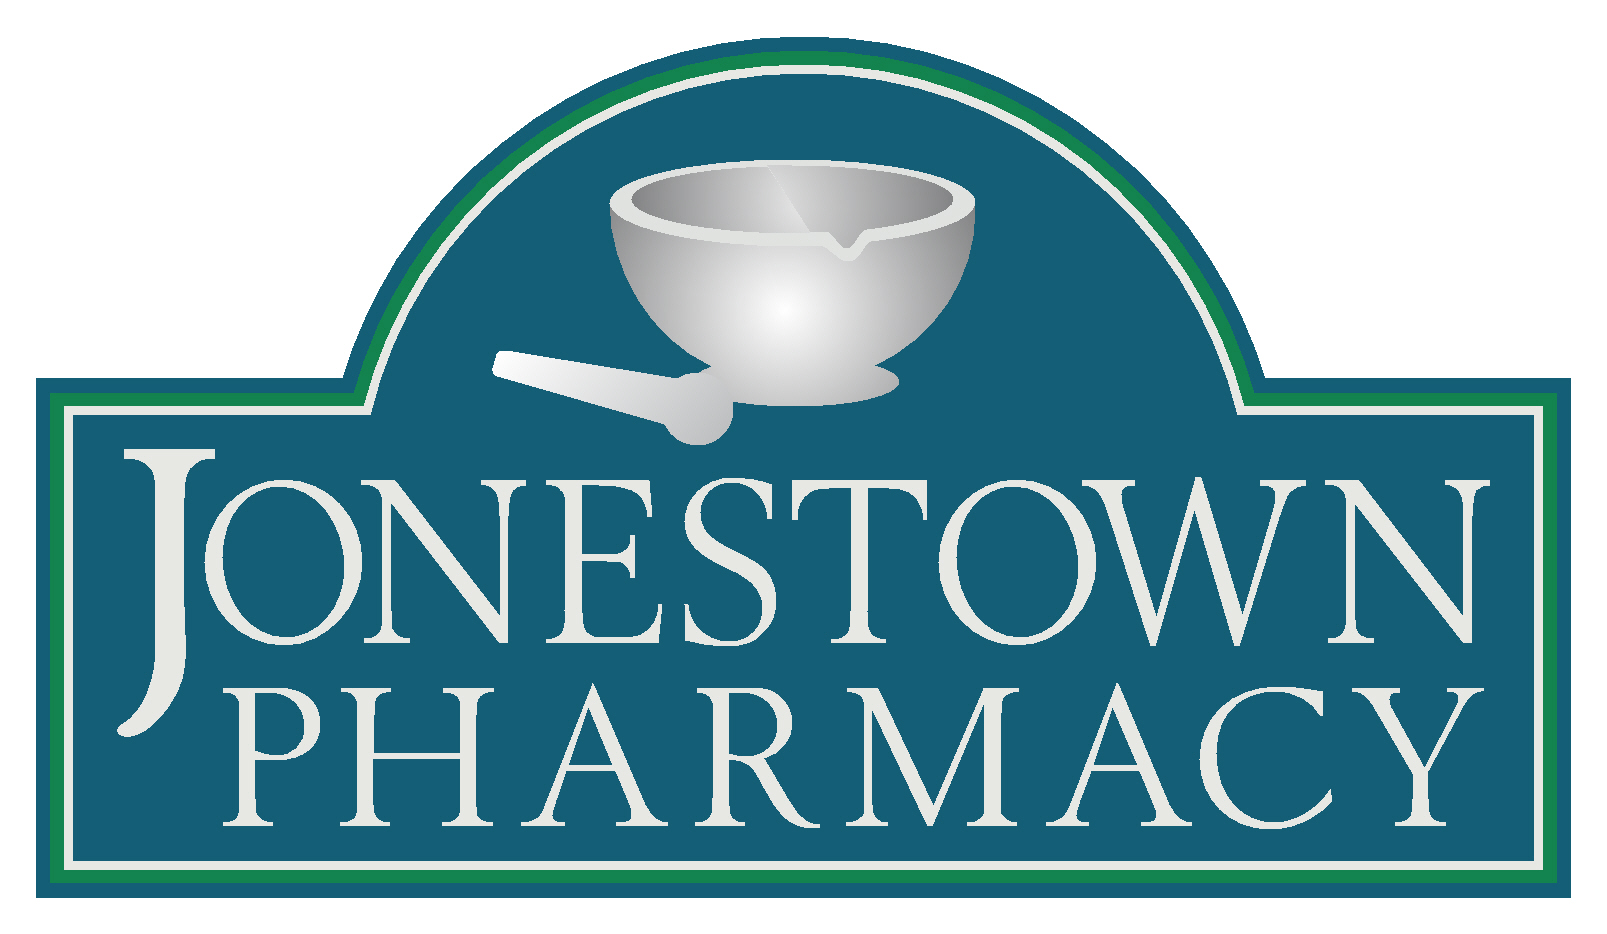 Jonestown Pharmacy